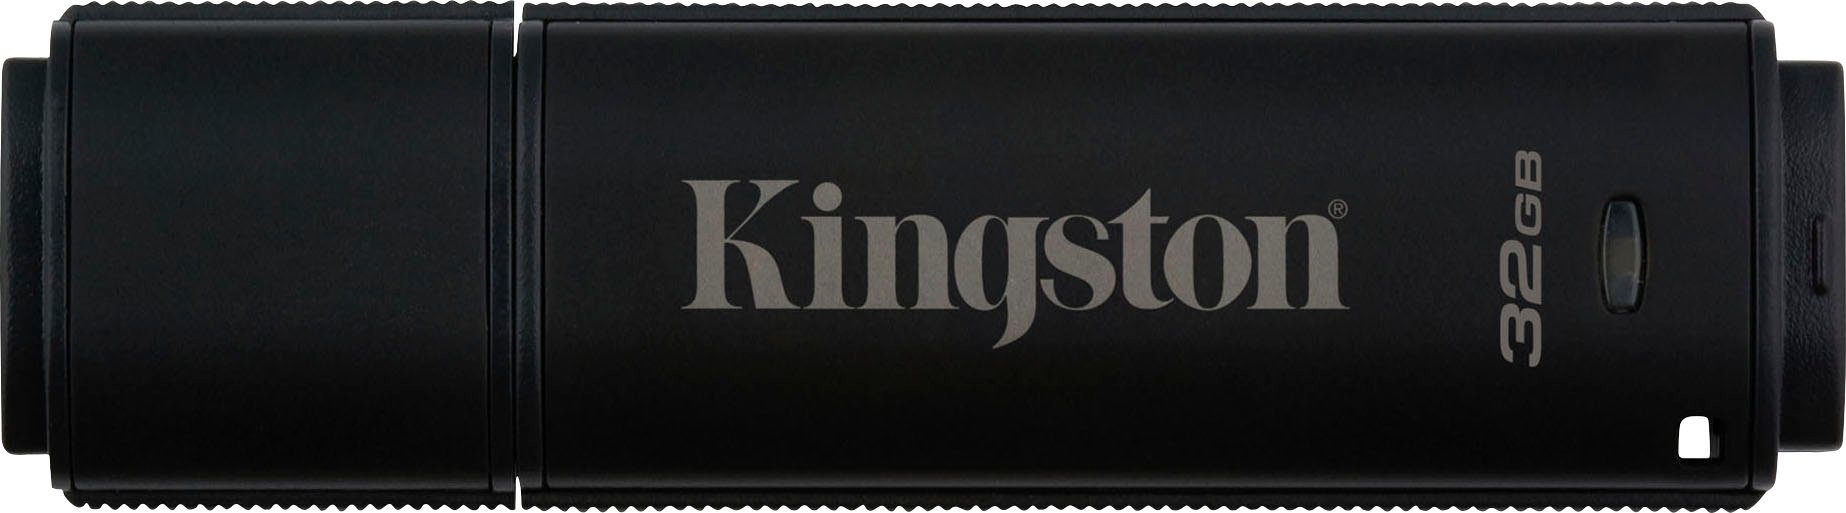 Kingston DT4000G2 32GB USB-Stick (USB 3.0, Lesegeschwindigkeit 250 MB/s)